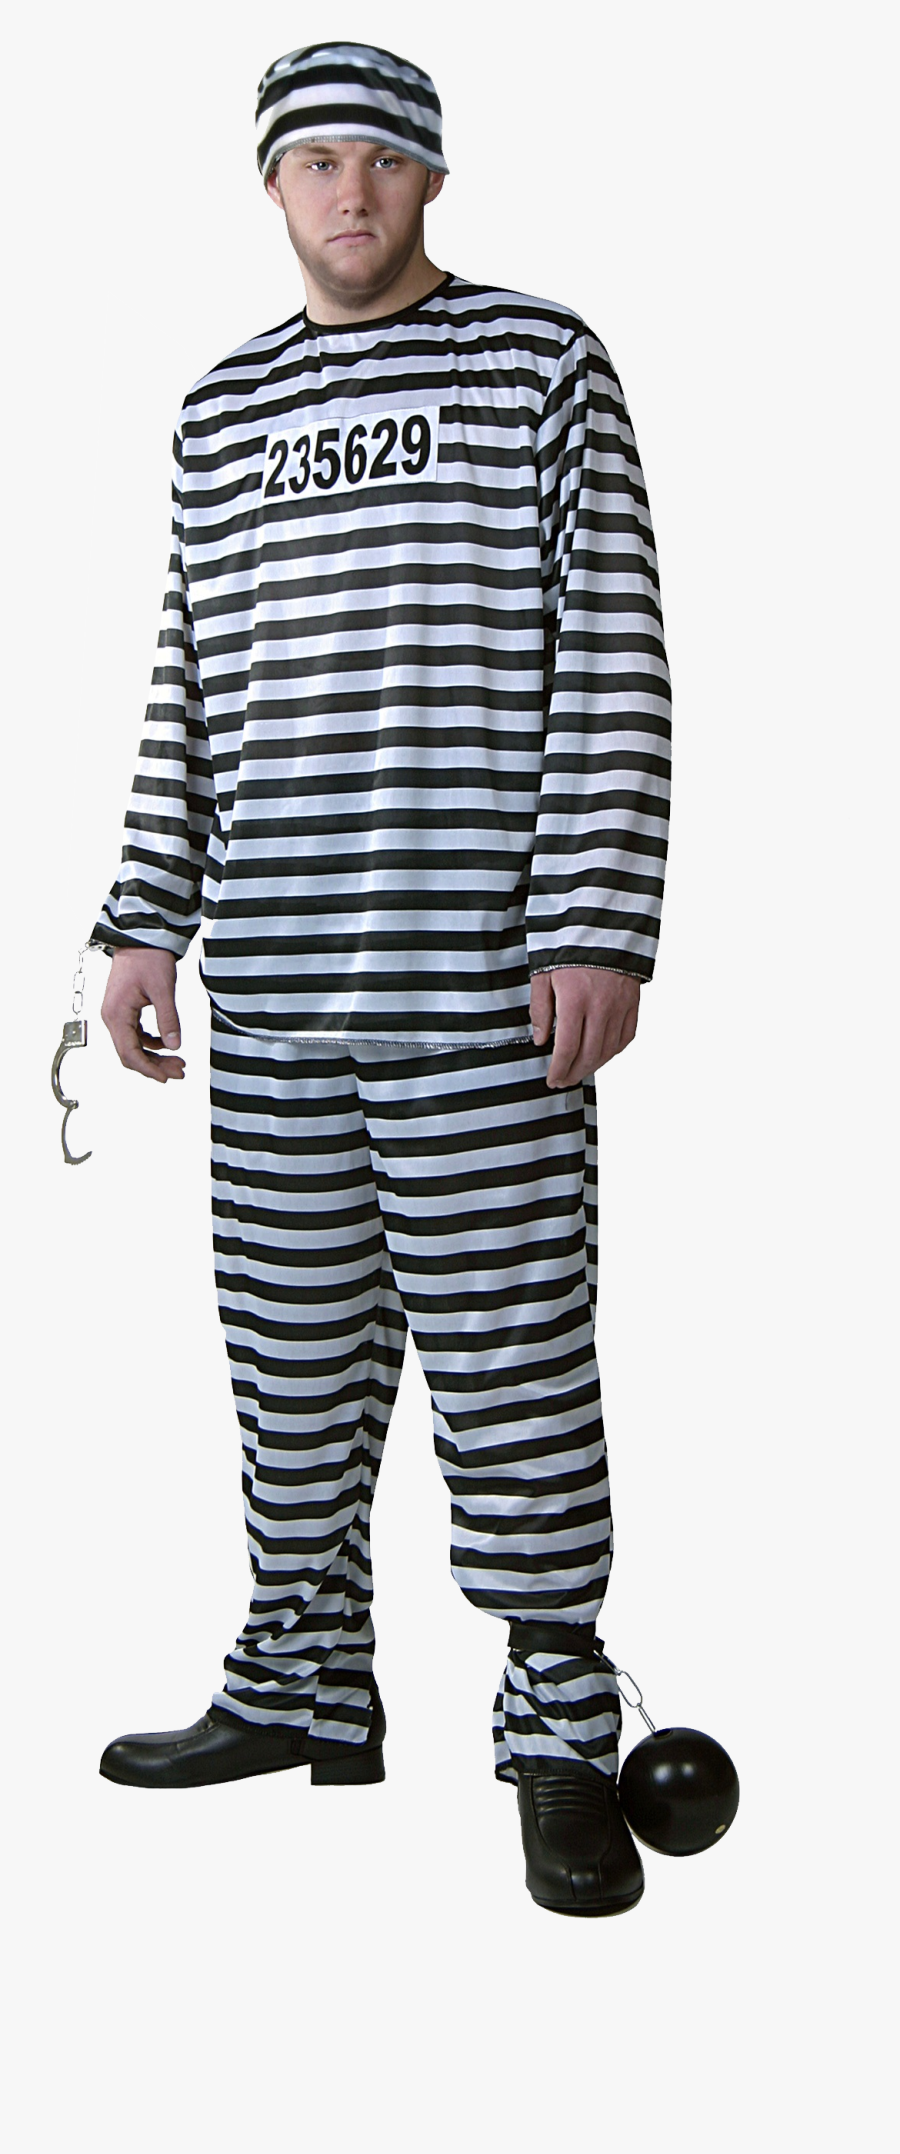 Mens Prisoner Costume Clipart , Png Download - Prison Costume, Transparent Clipart